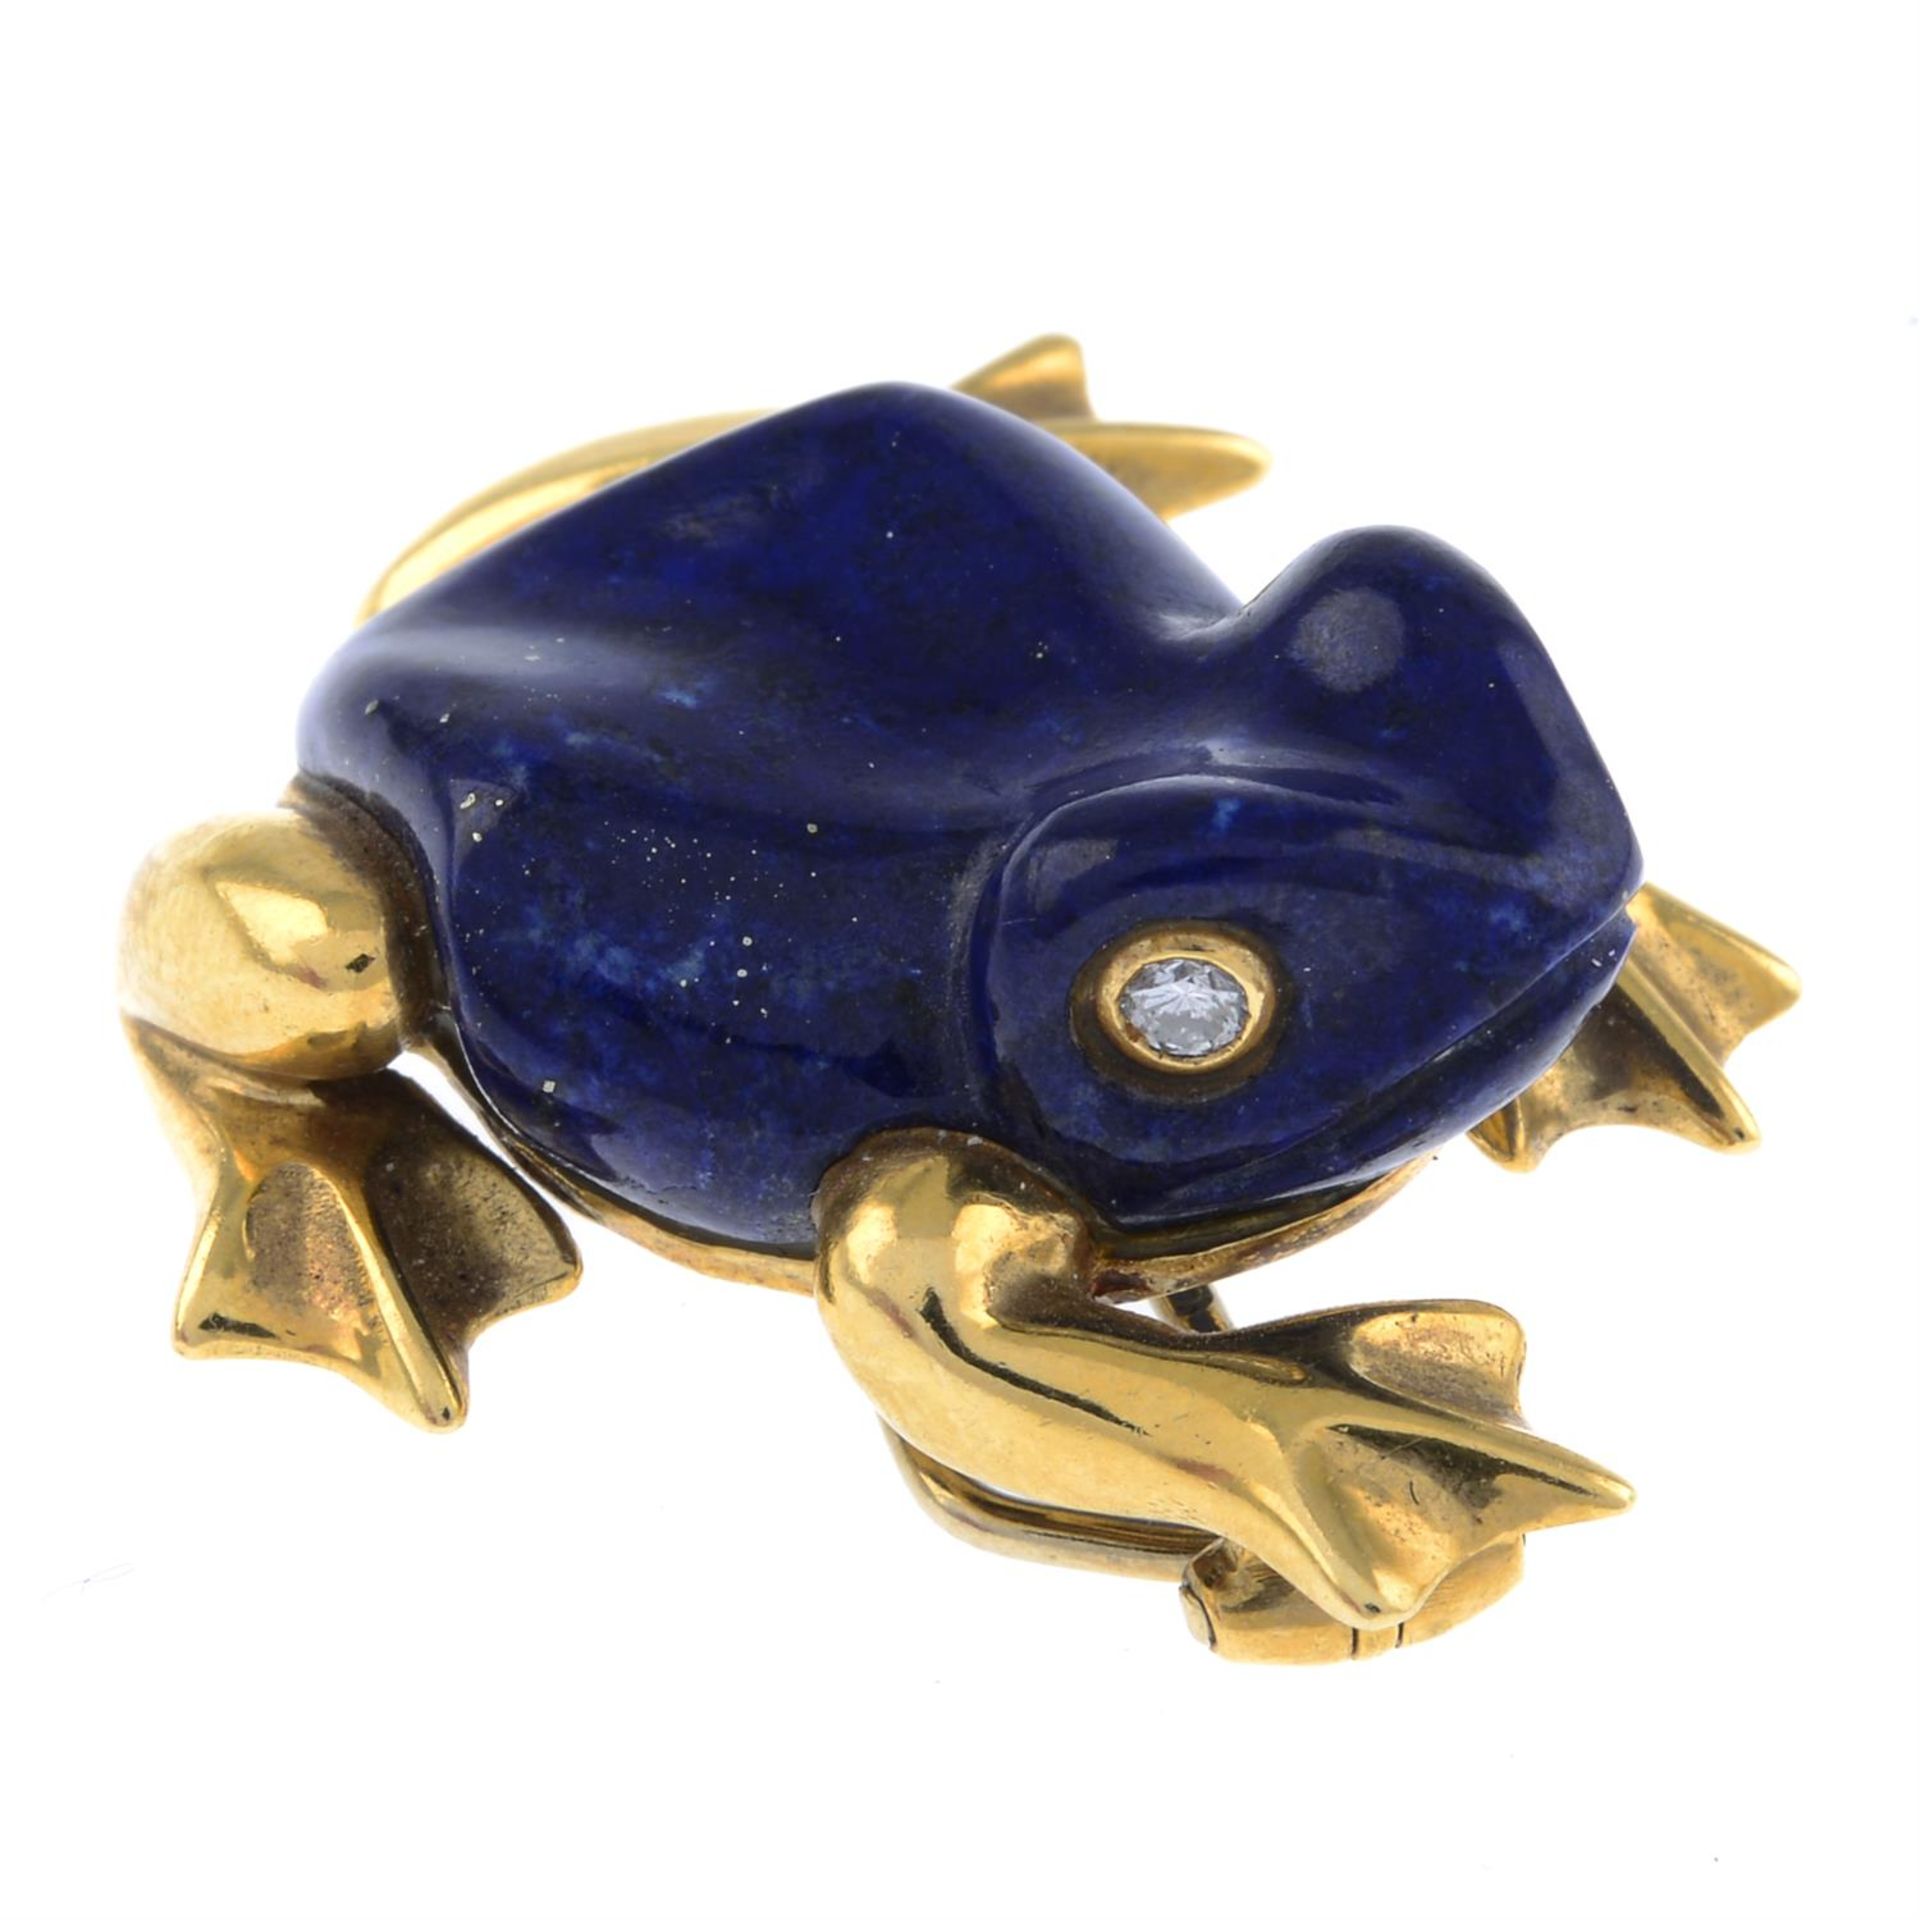 Lapis lazuli frog brooch, with diamond eye detail - Image 2 of 3